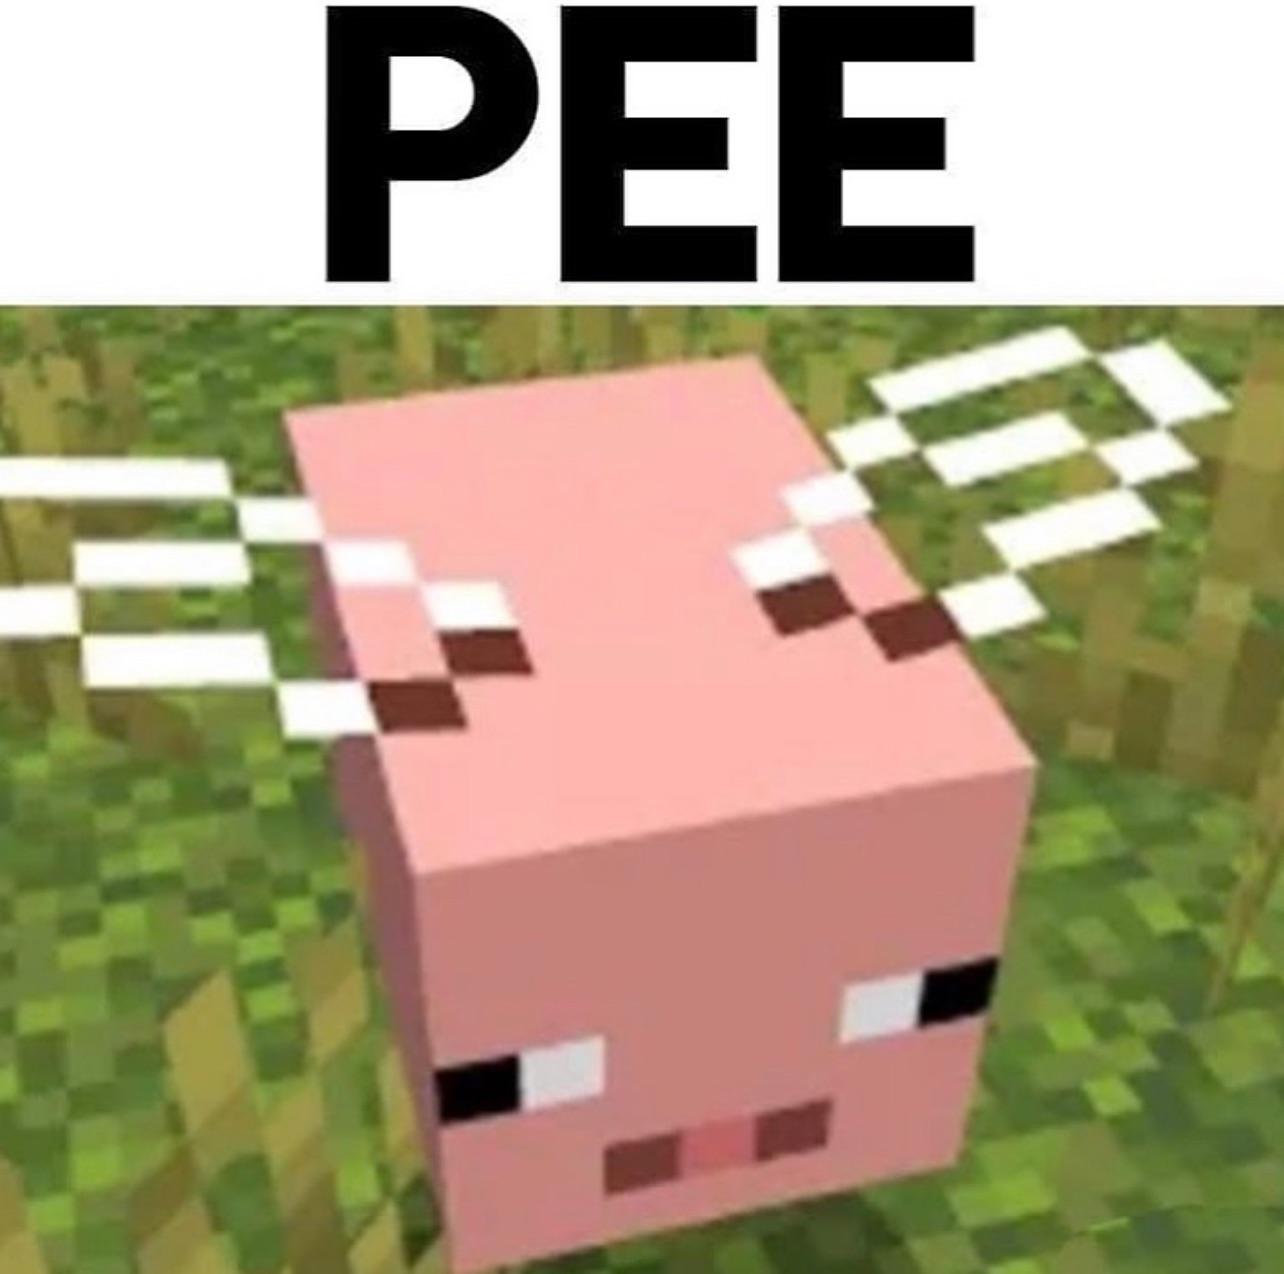 Minecraft Memes - Pee Meme Madness